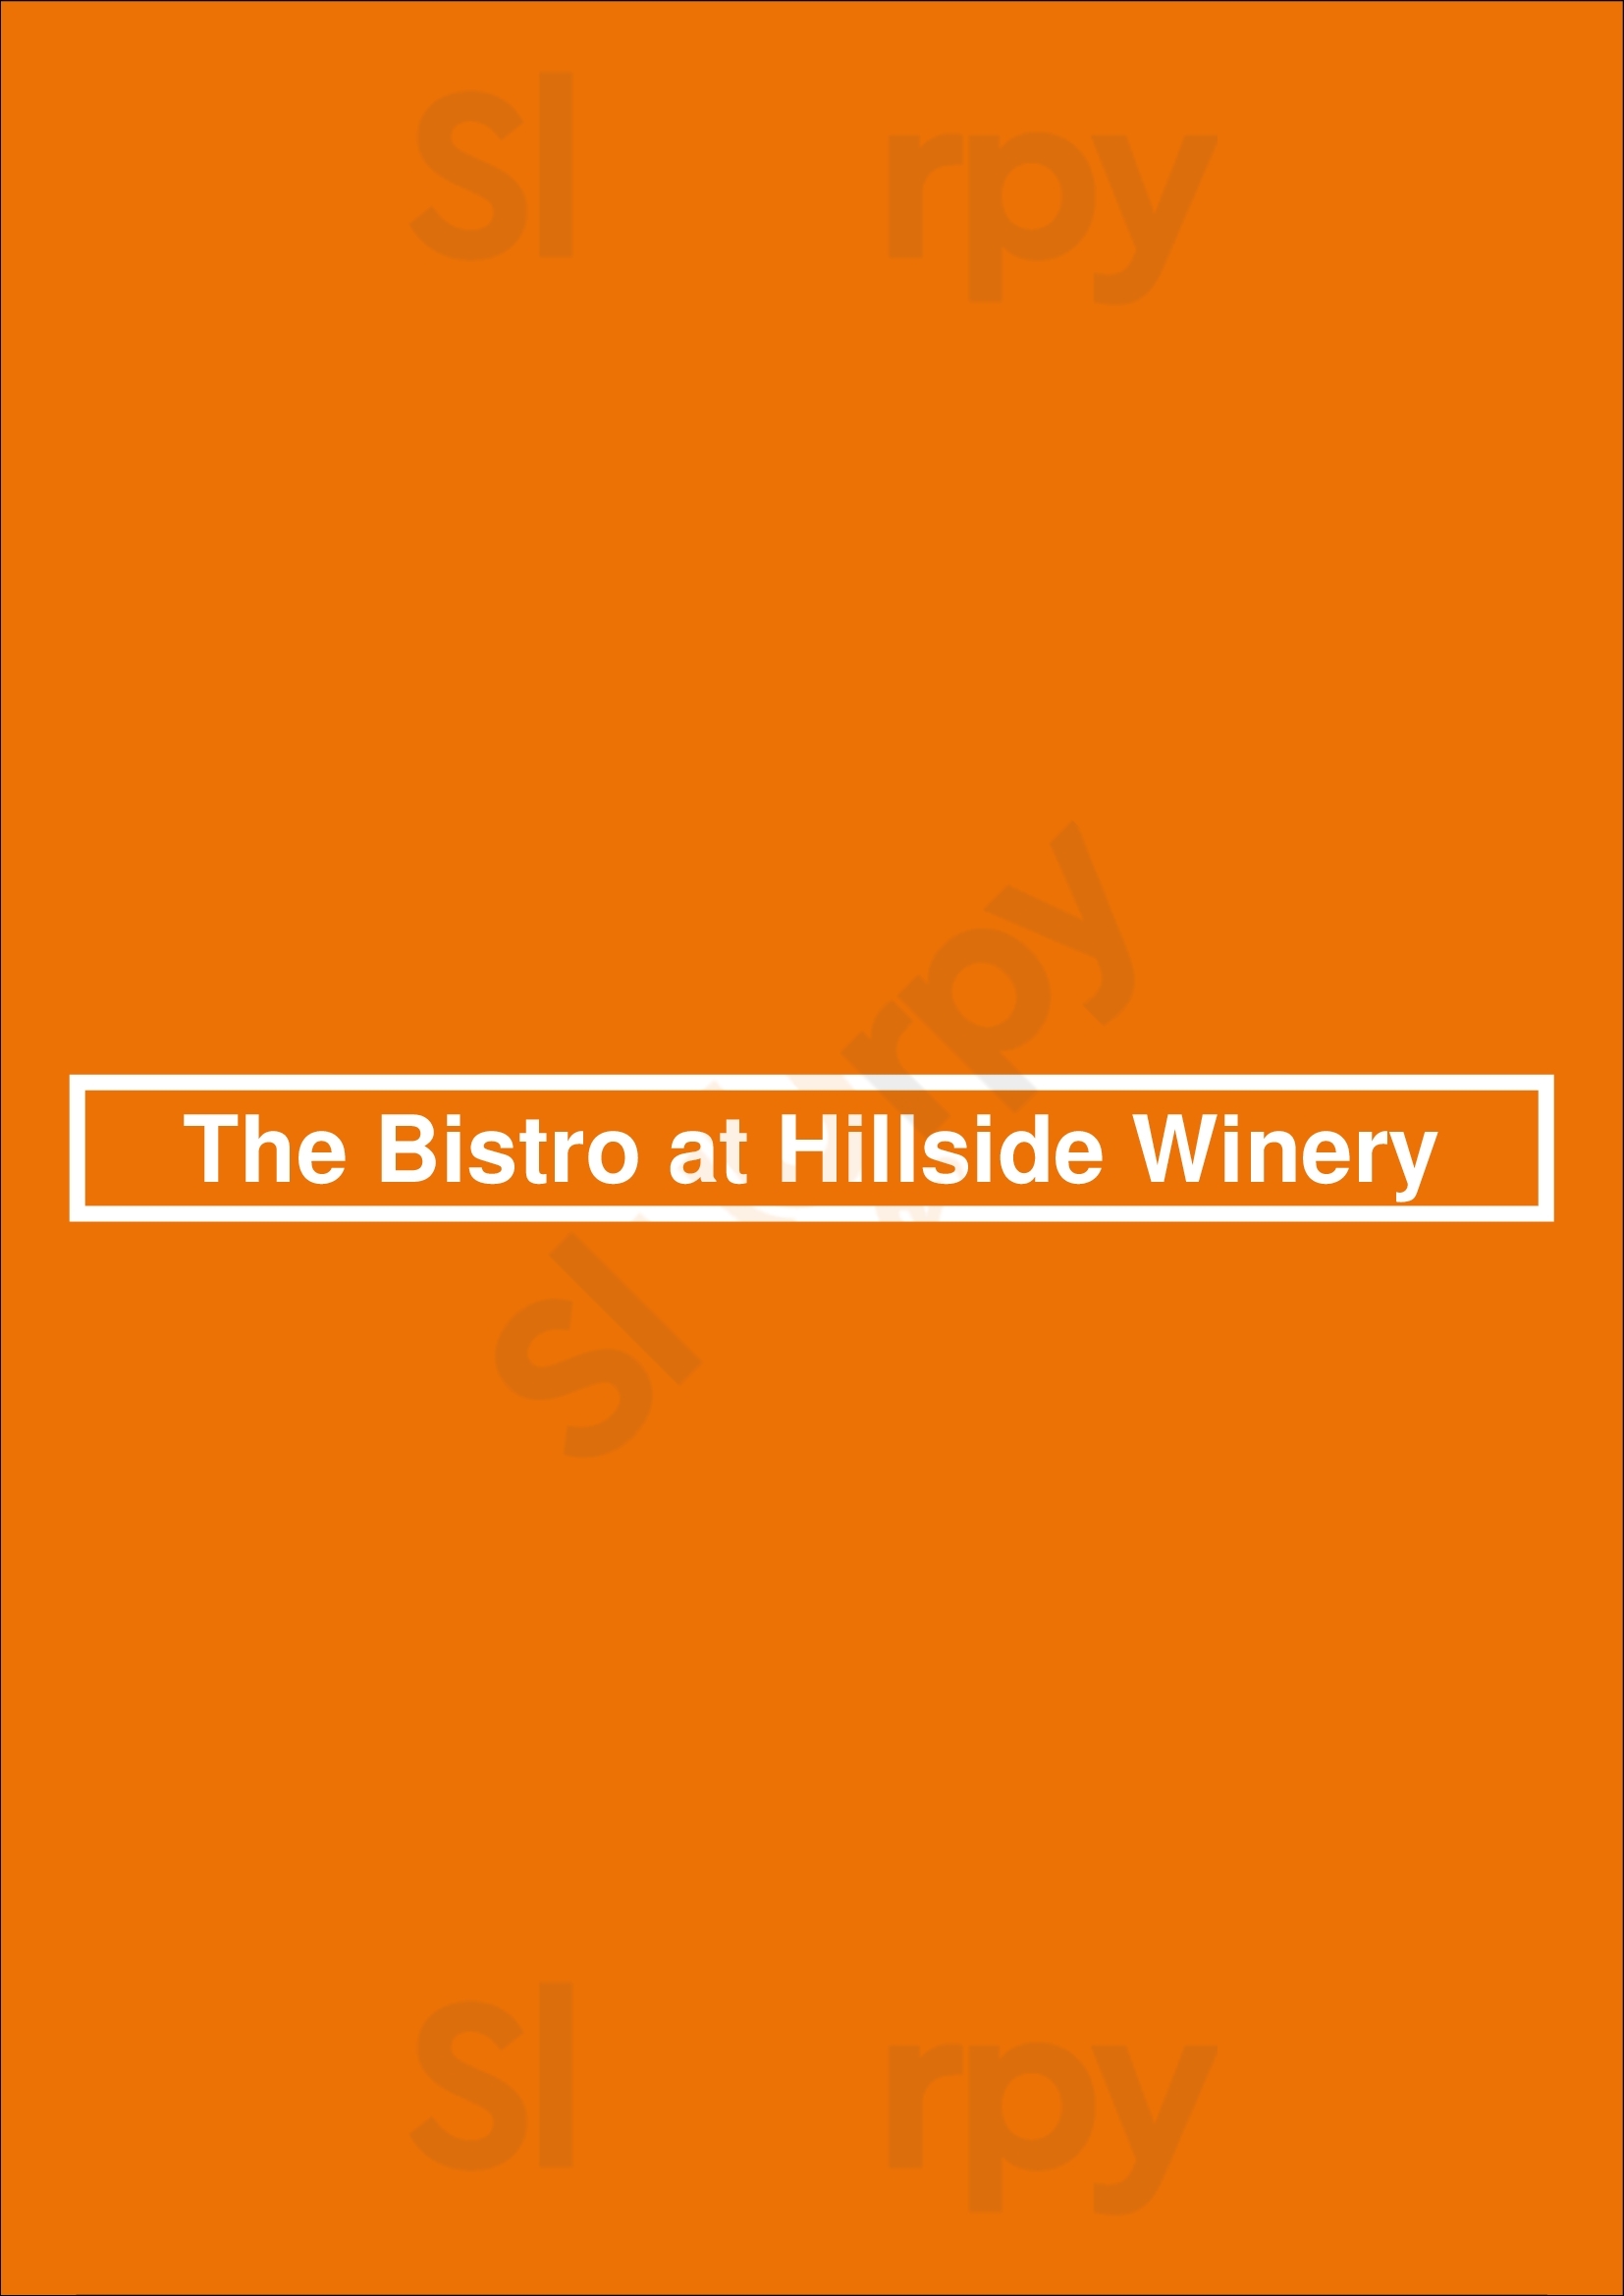 The Bistro At Hillside Winery Penticton Menu - 1